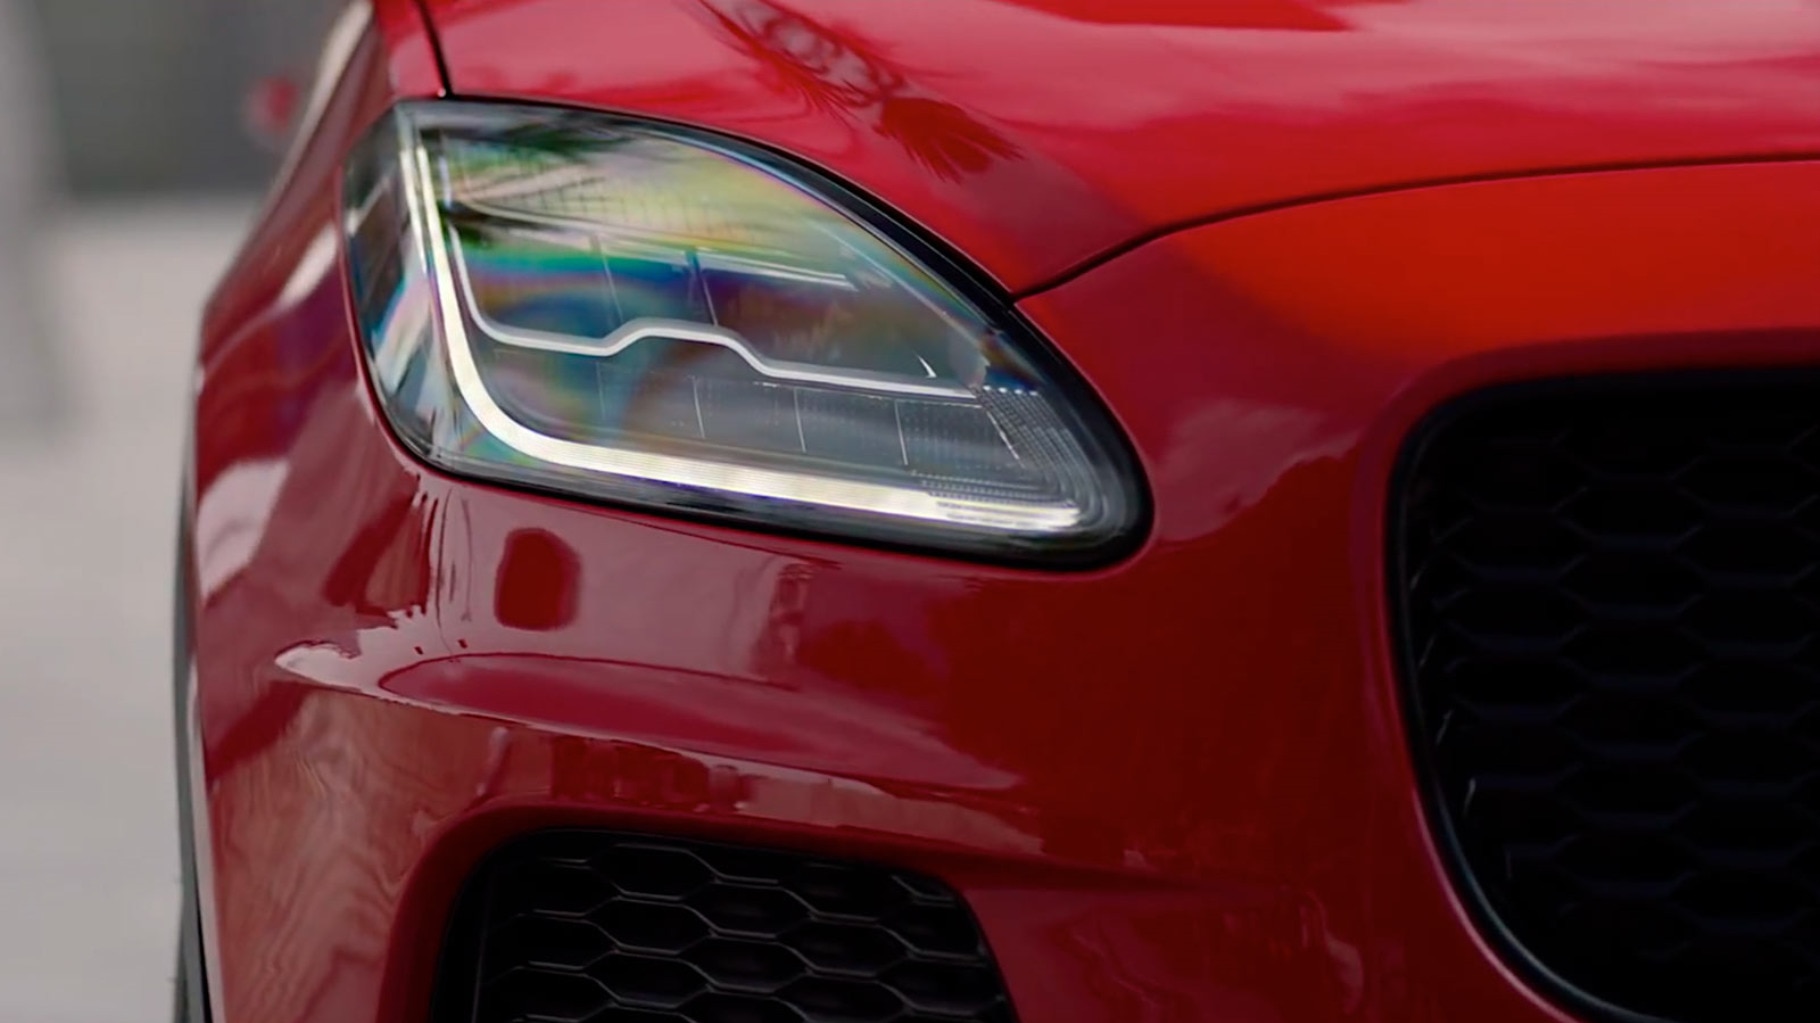 Jaguar E-Pace Headlight close-up.